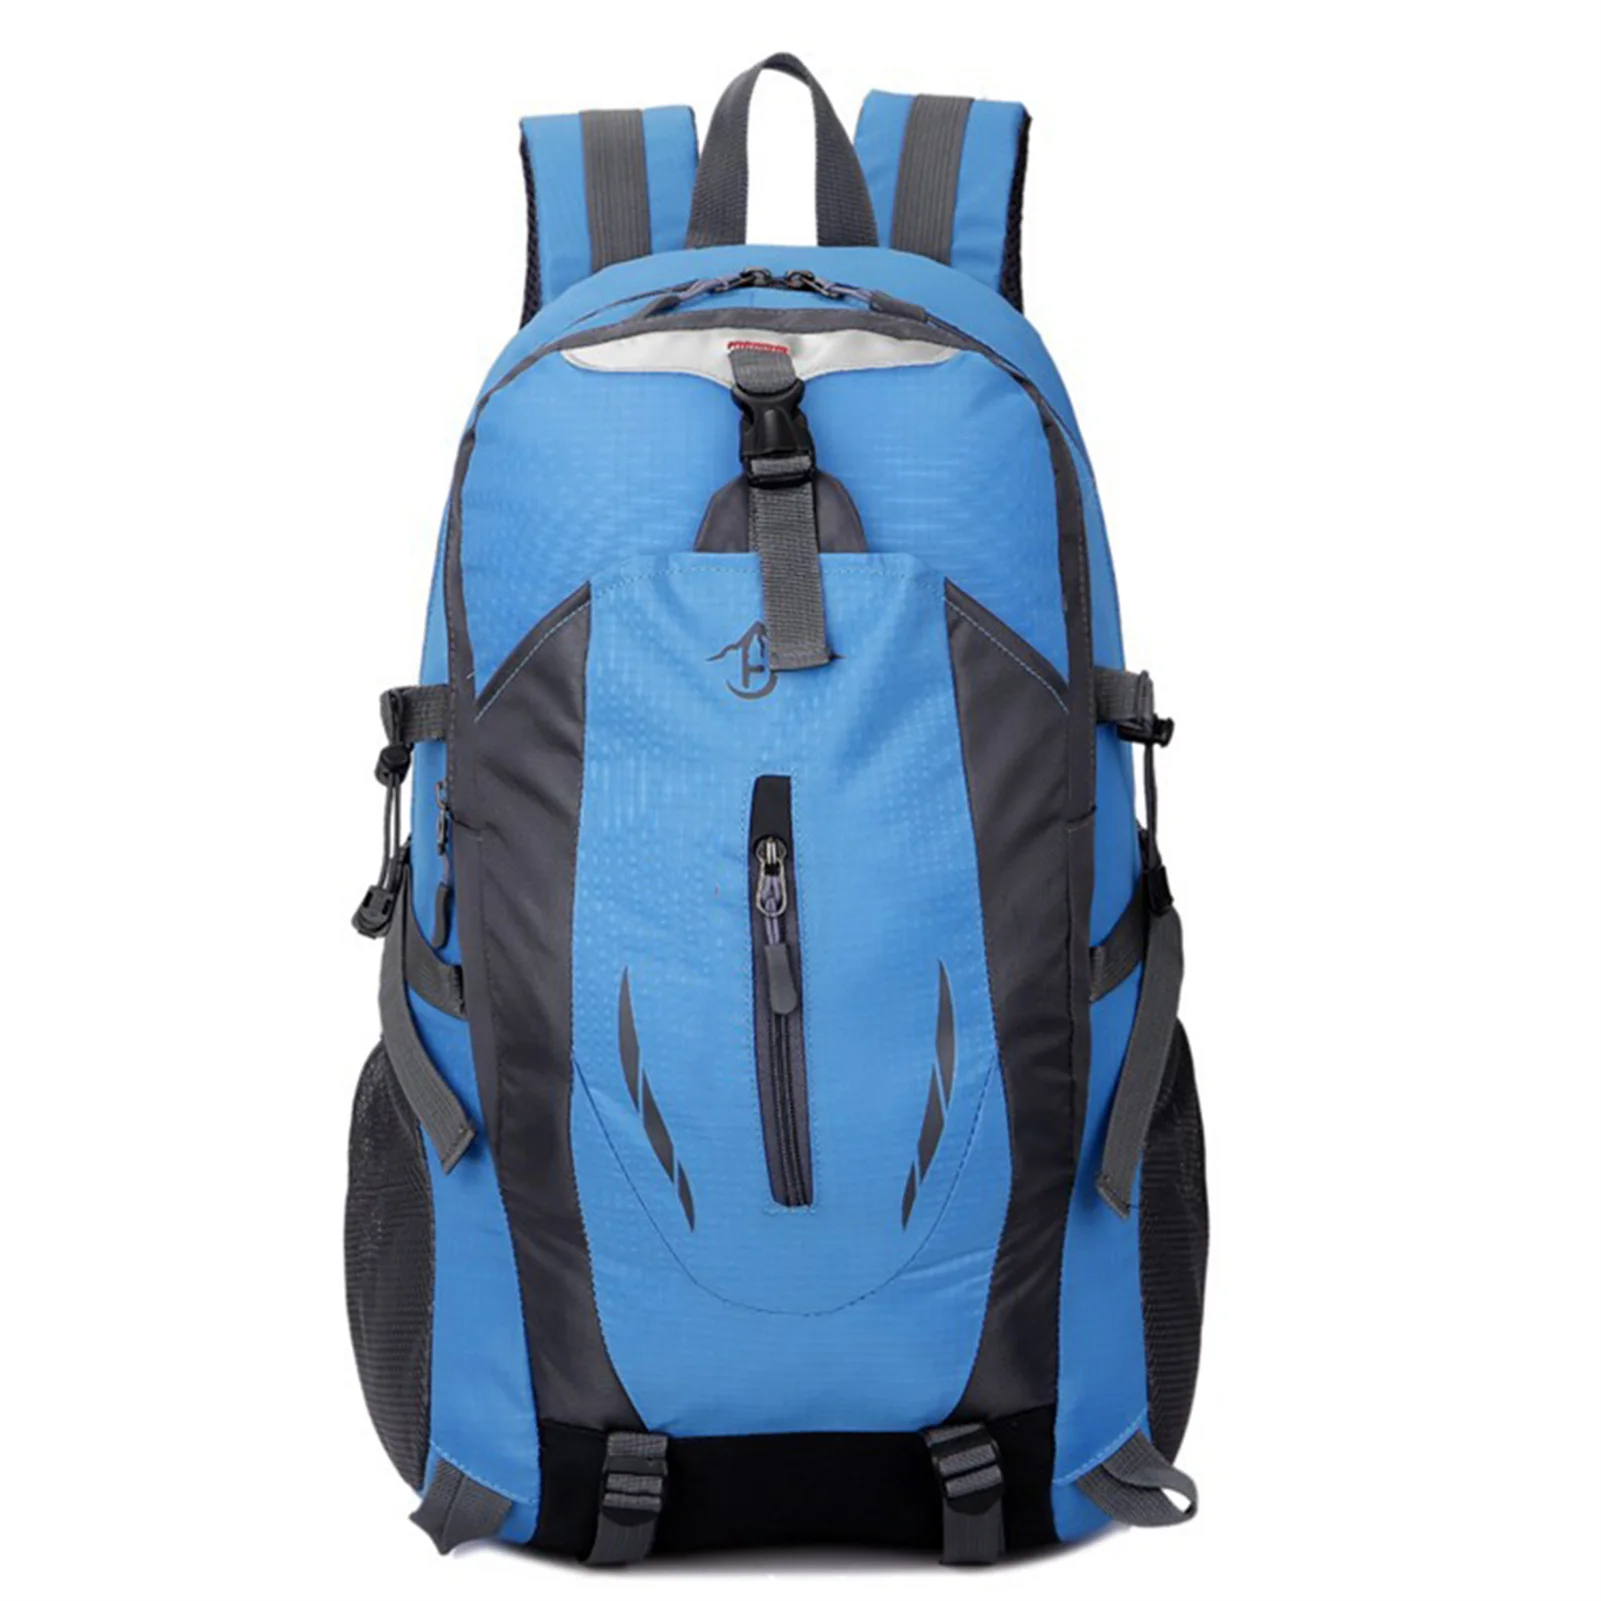 

Travel Hiking Backpack Durable Laptops Backpack Adjustable Straps Business Bag Stylish Casual Large Capacity Unisex 1 PC рюкзак